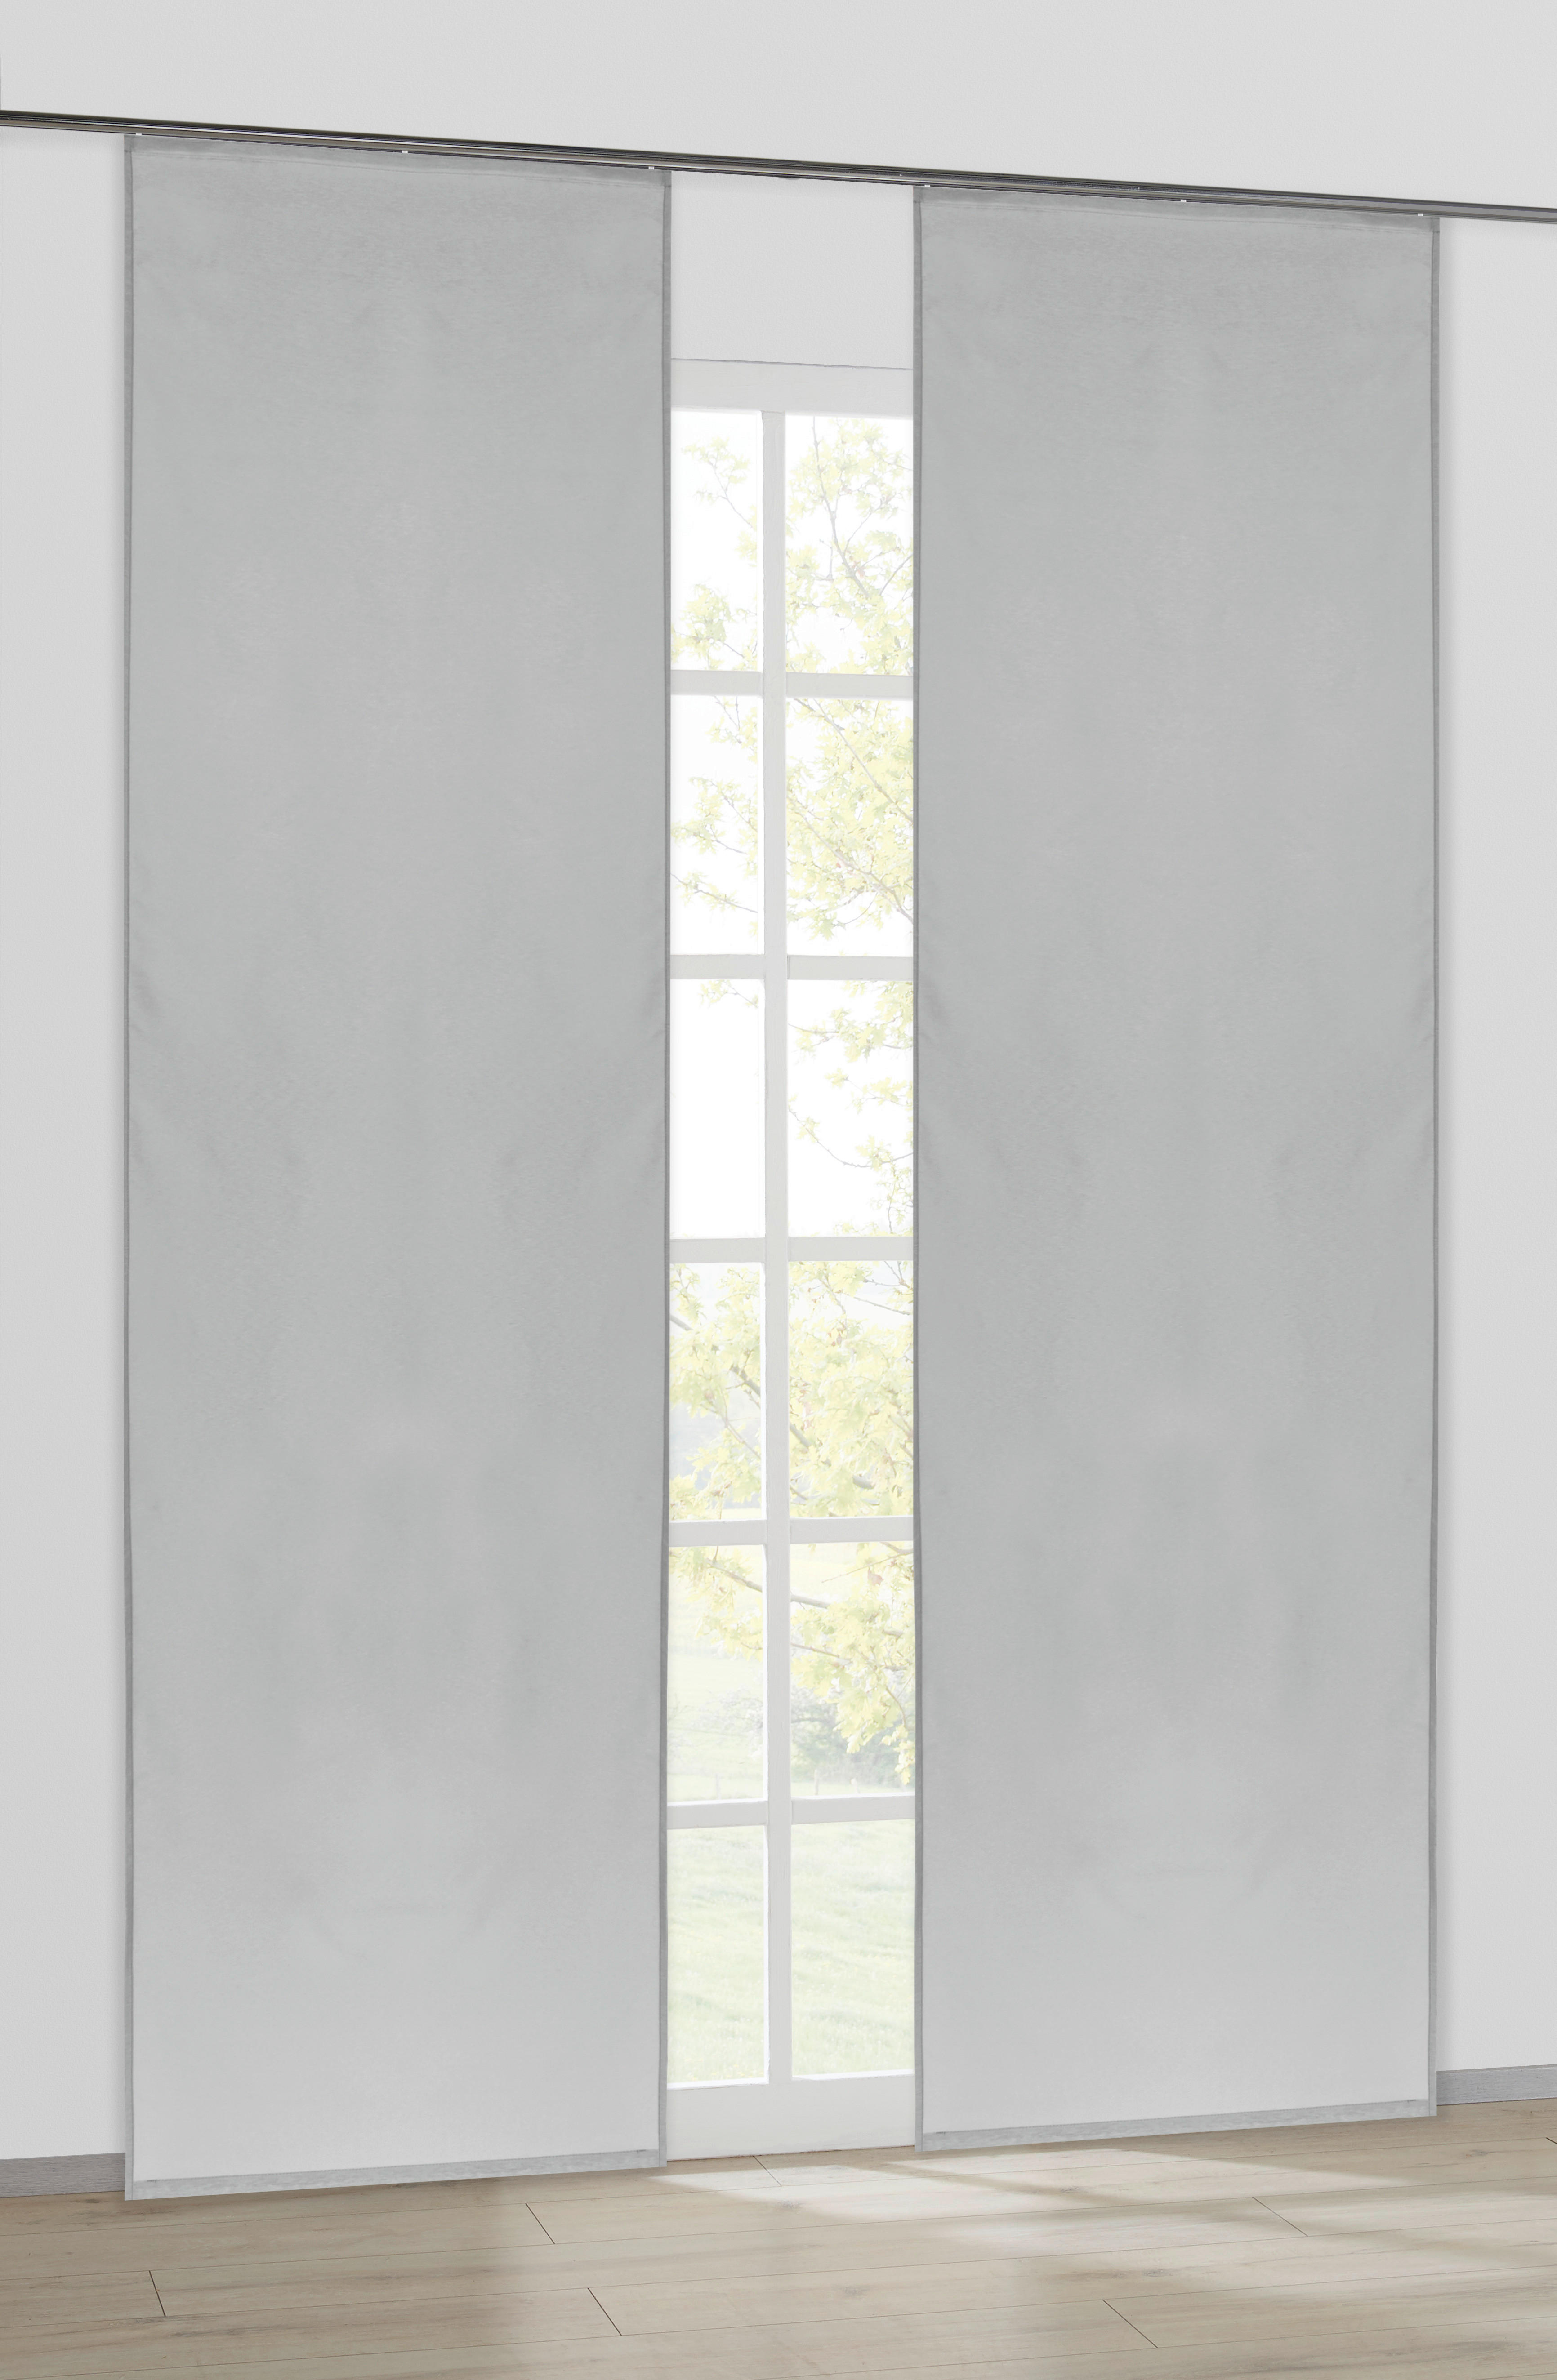 Schiebevorhang Pearl grau B/L: ca. 60x245 cm Pearl - grau (60,00/245,00cm) - ACUS design collection